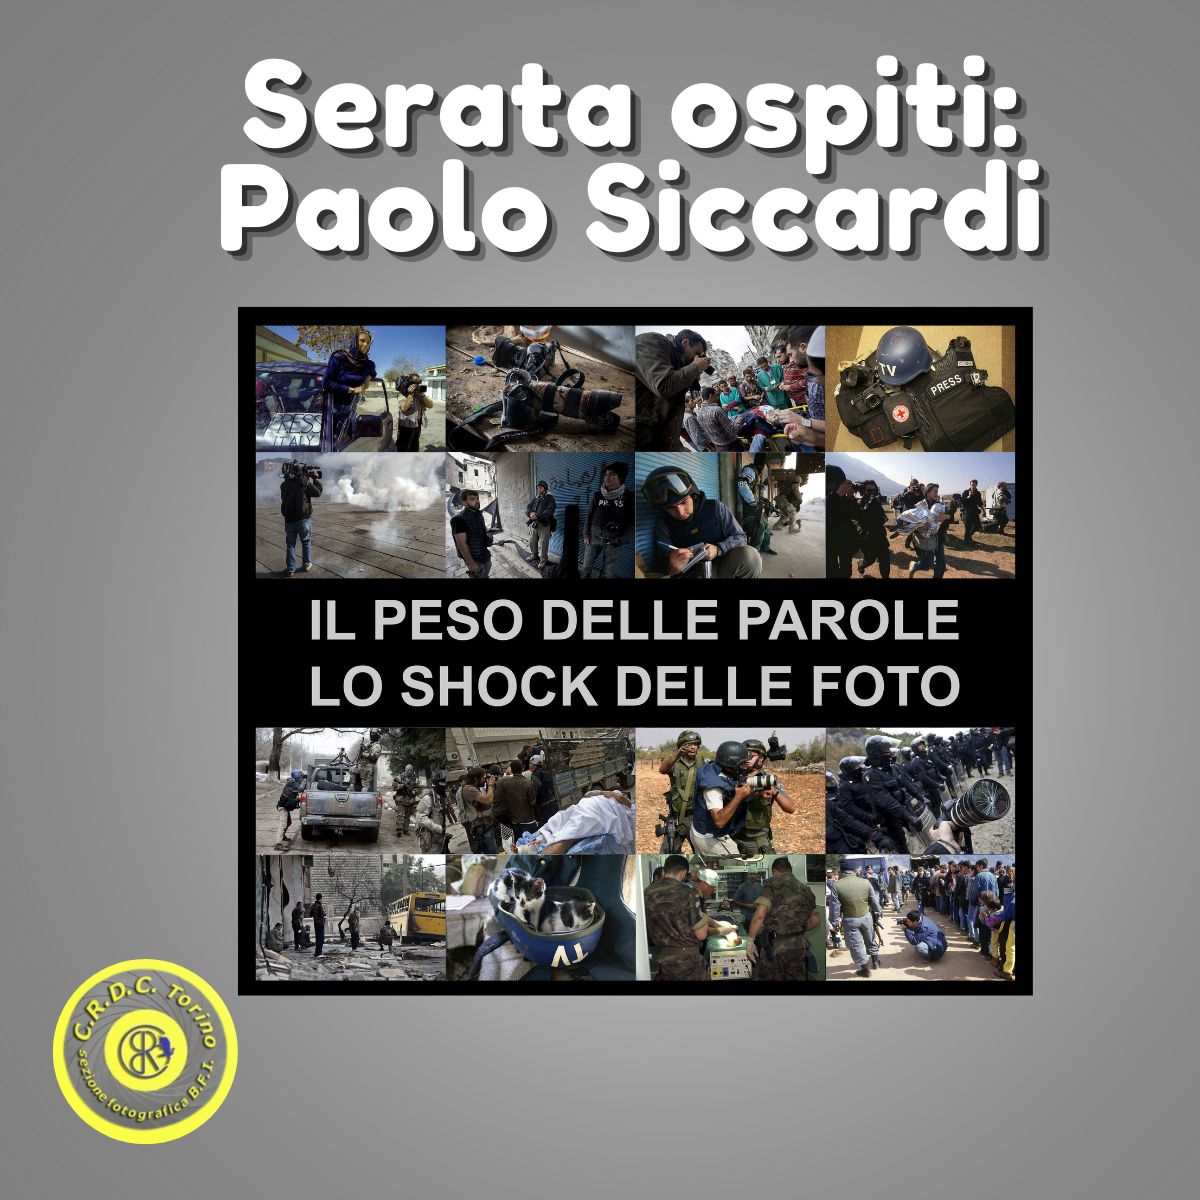 #persoci serata ospite: Paolo Siccardi